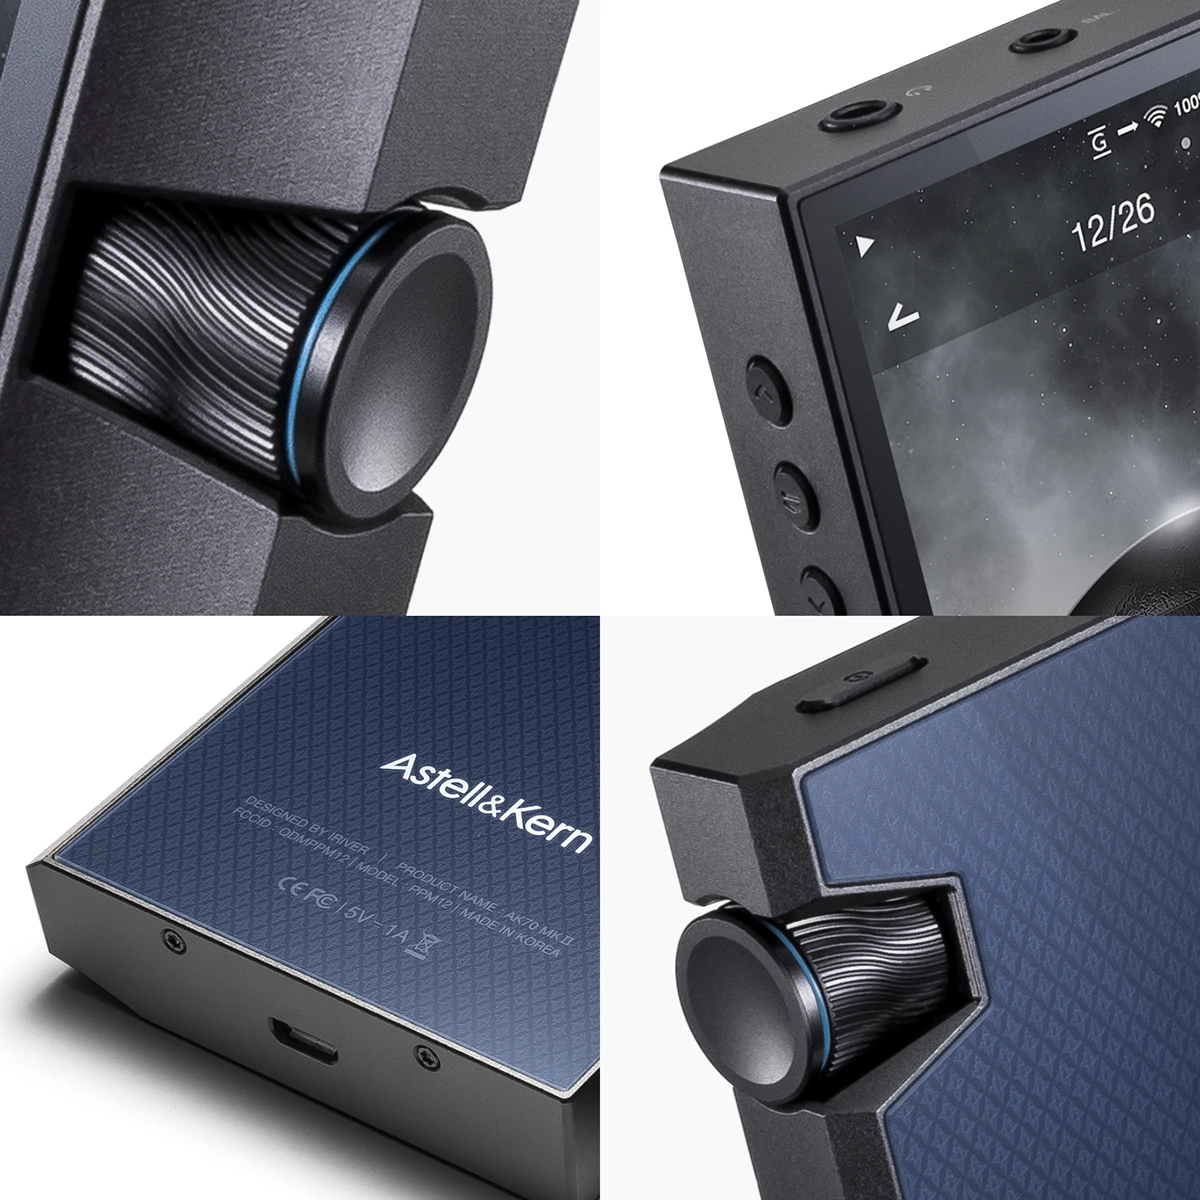 Astell&Kern AK70 MKII High Resolution Audio Player Portable MP3